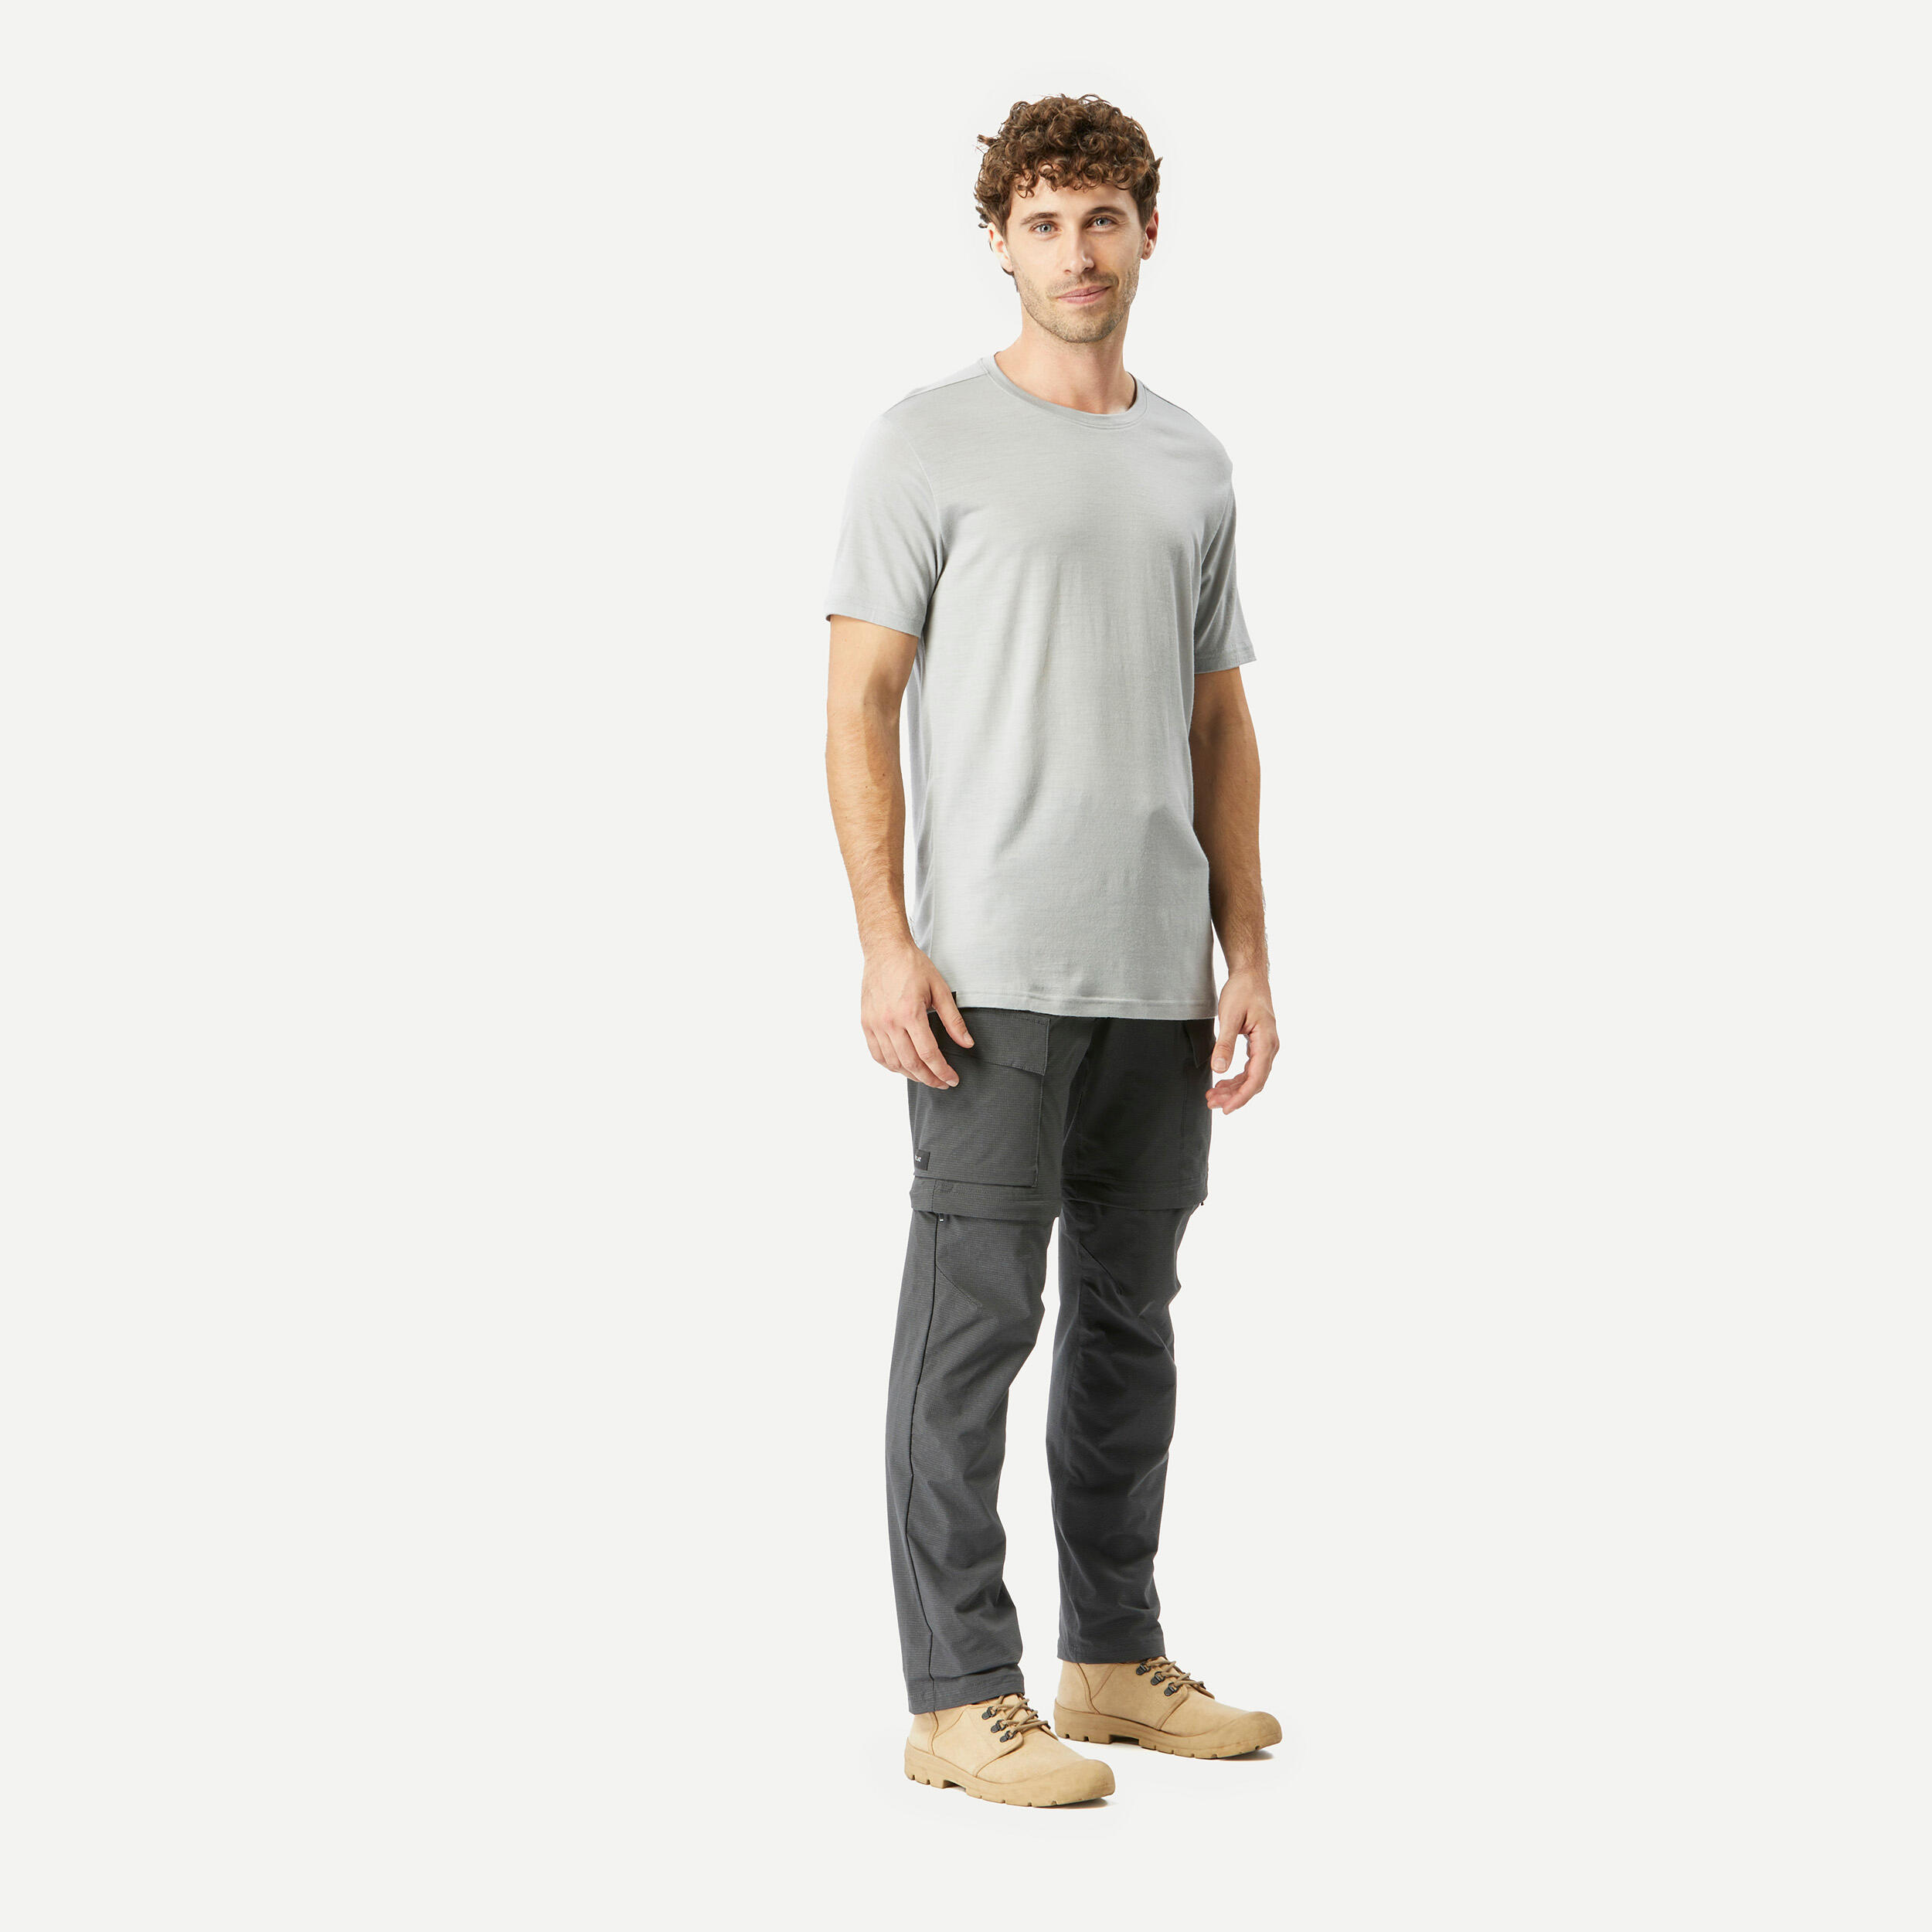 Men’s short-sleeved Merino wool hiking travel t-shirt - TRAVEL 500 grey 3/6